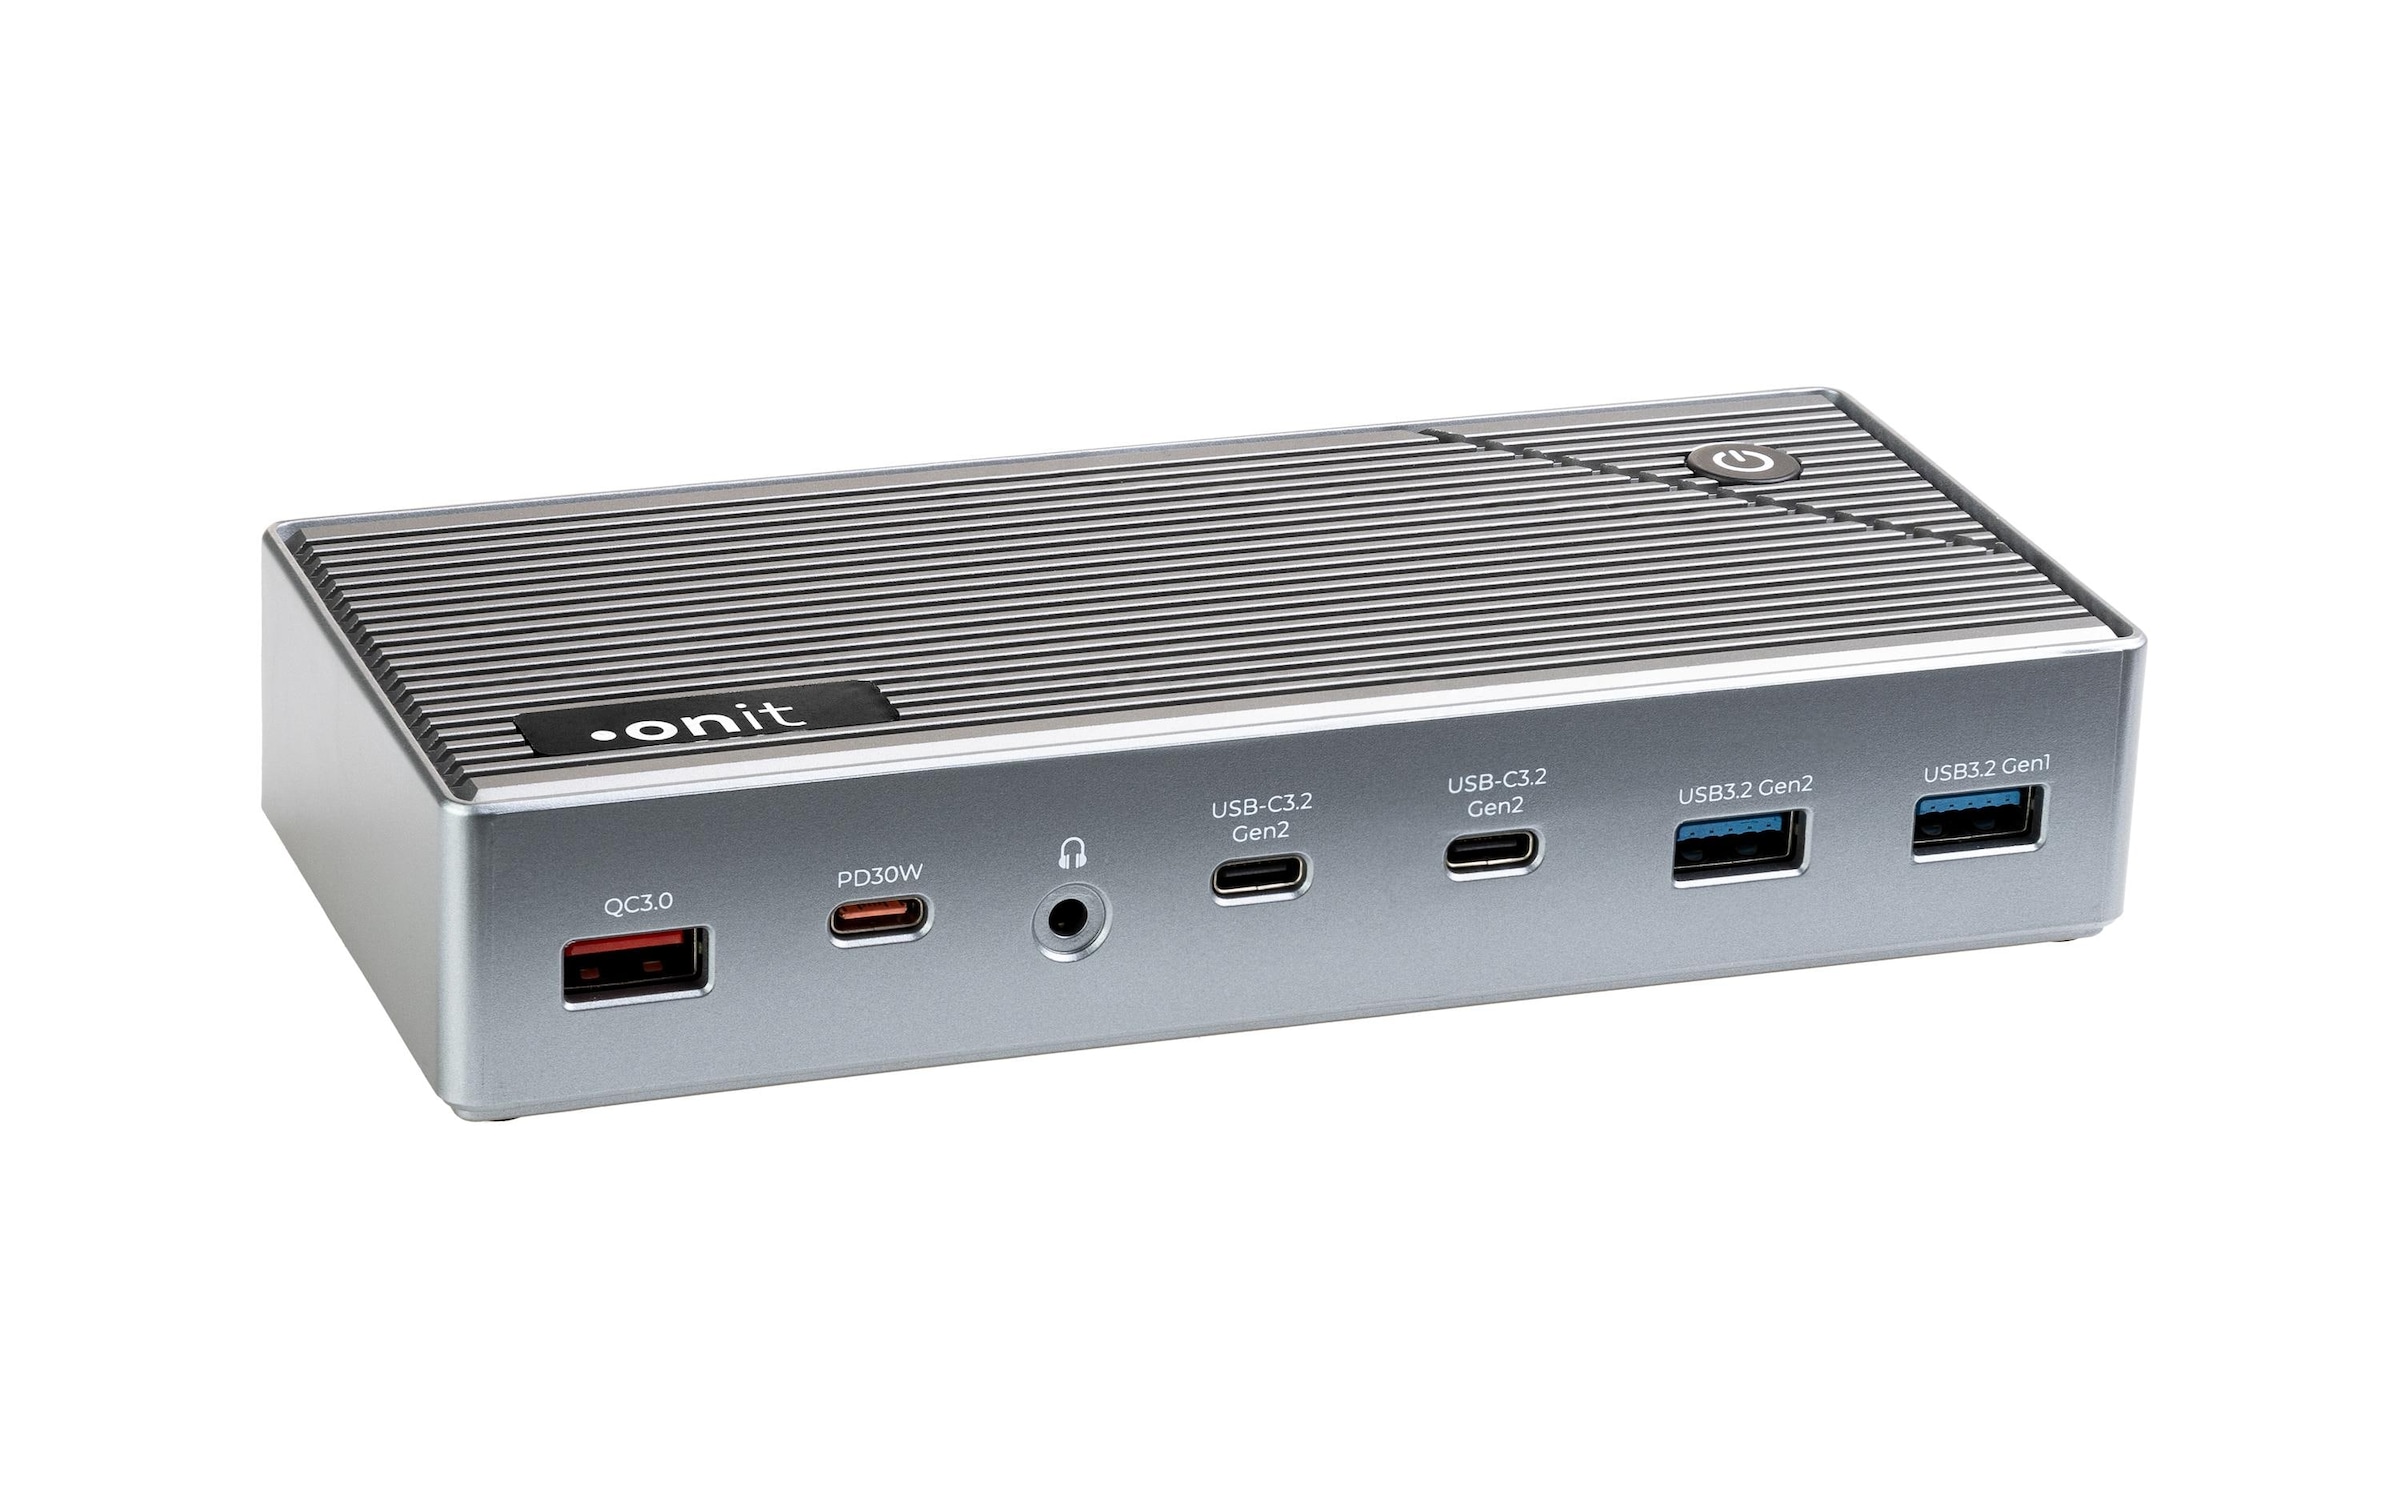 onit Laptop-Dockingstation »Dockingstation Pro USB-C«